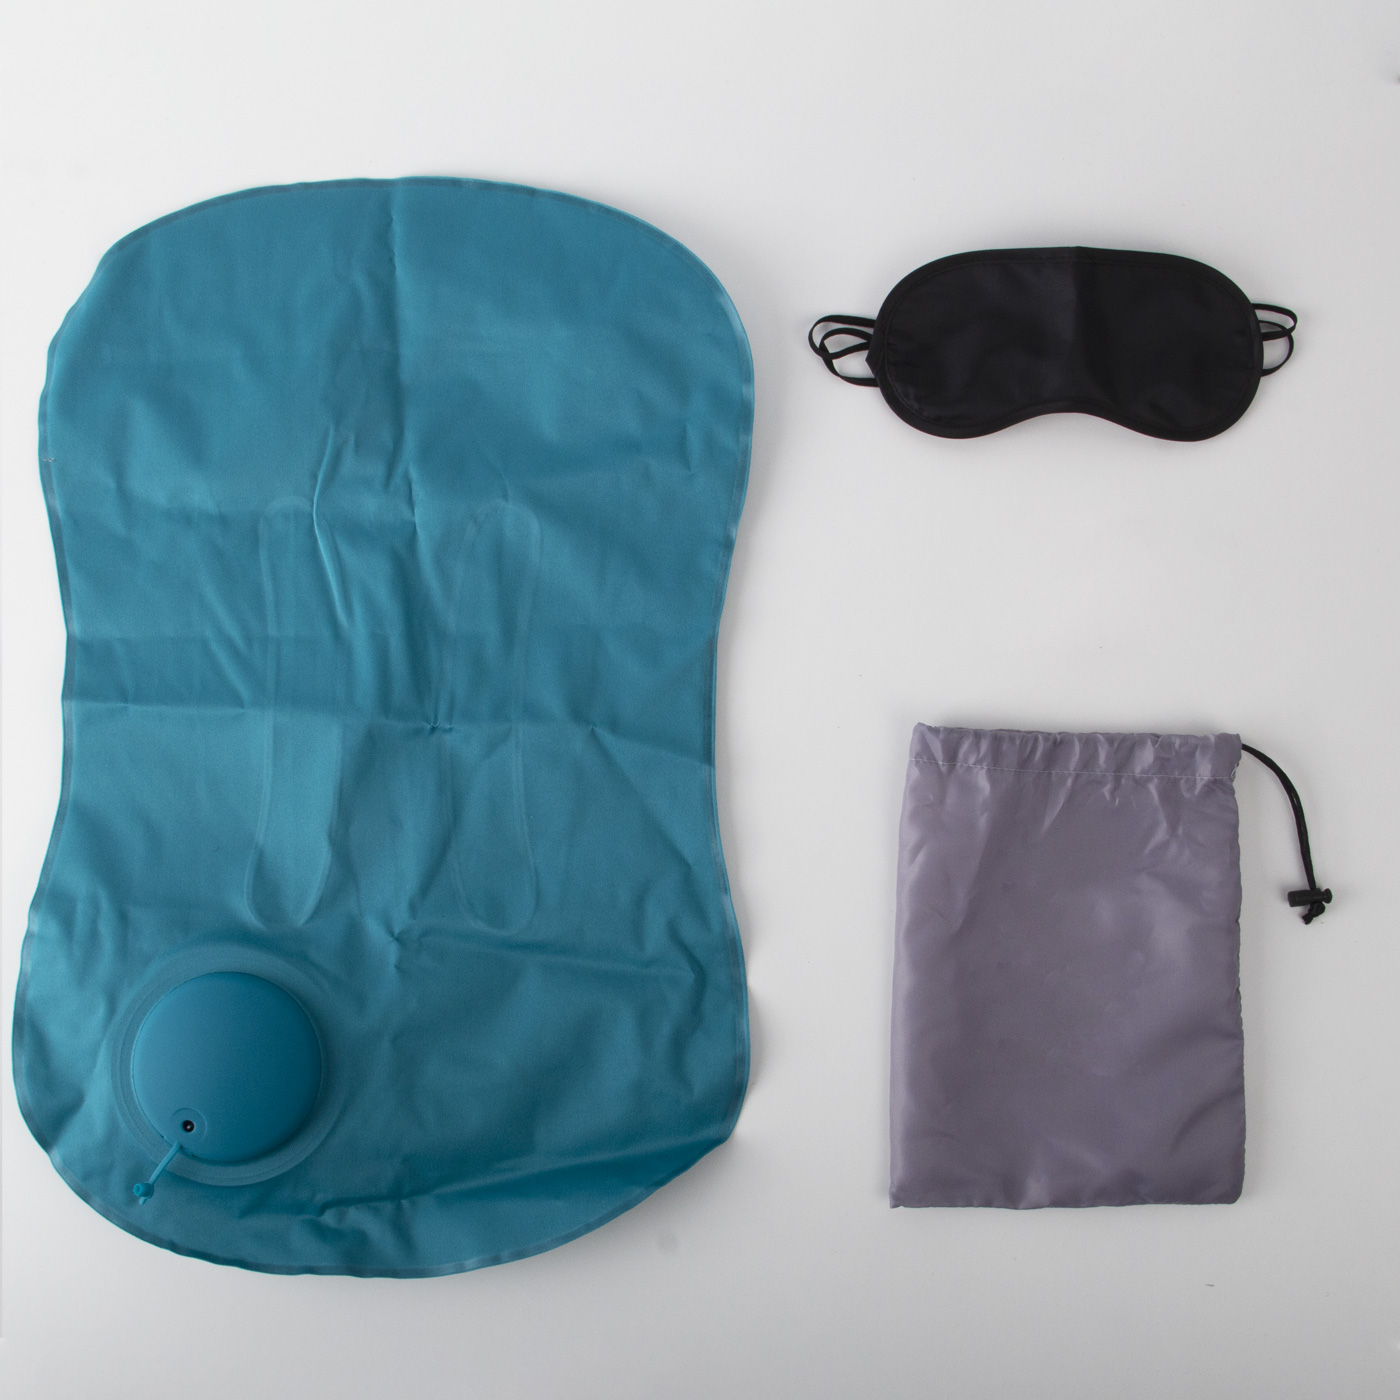 Portable Inflatable TPU Travel Pillow4